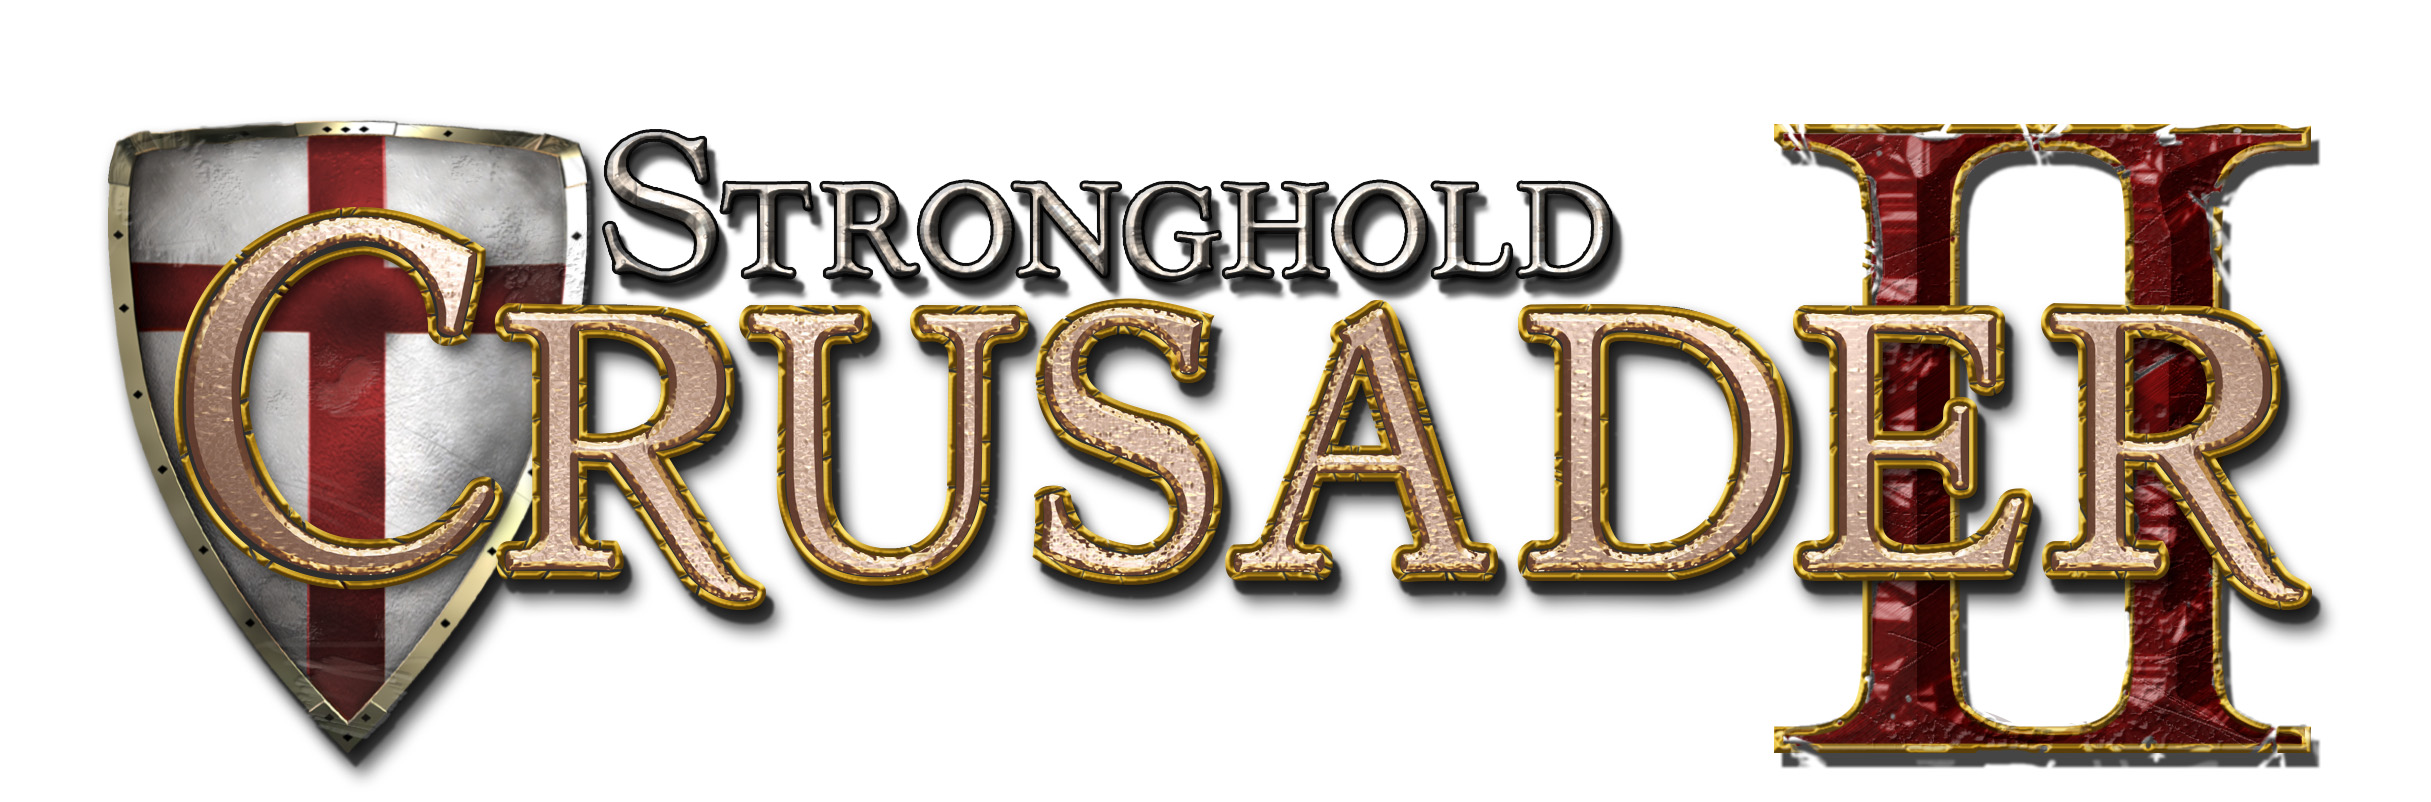 Стикерсв 2. Стронгхолд крусадер логотип. Стронгхолд Крусейдер 2 лого. Stronghold Crusader 2 (2014). Логотип игры стронгхолд крусадер.